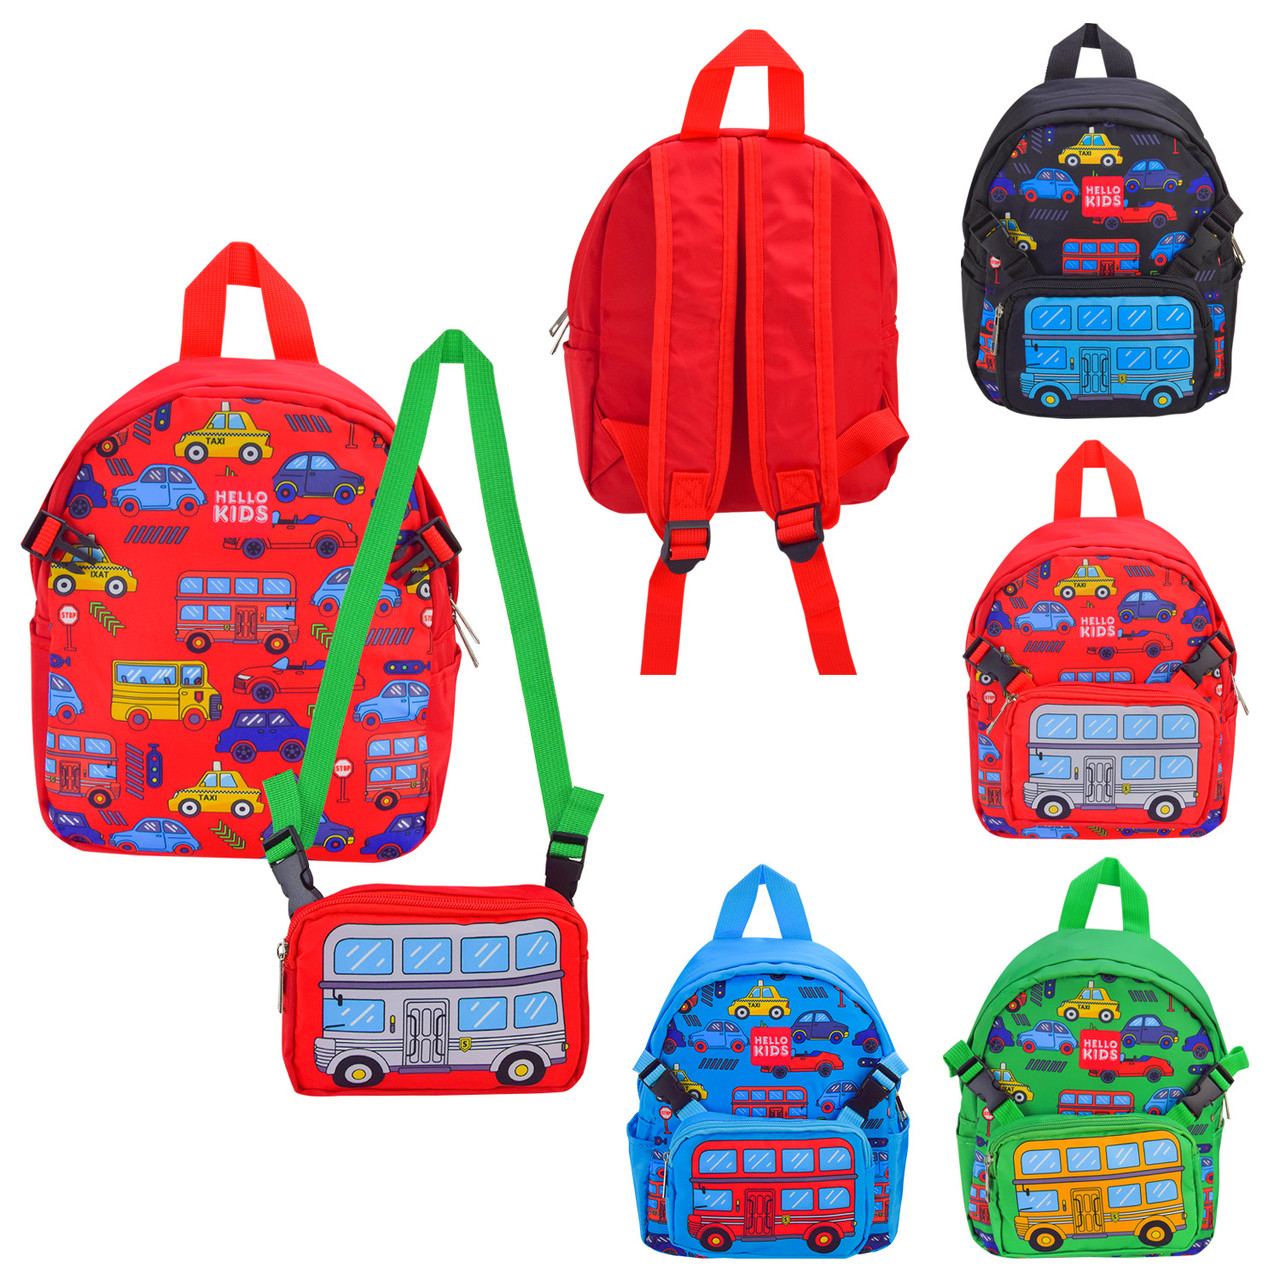 Дитячий рюкзак 2в1 C15704 машинки, 4 кольори, сумочка 18*12см, рюкзак 21*26*11 см TZP162